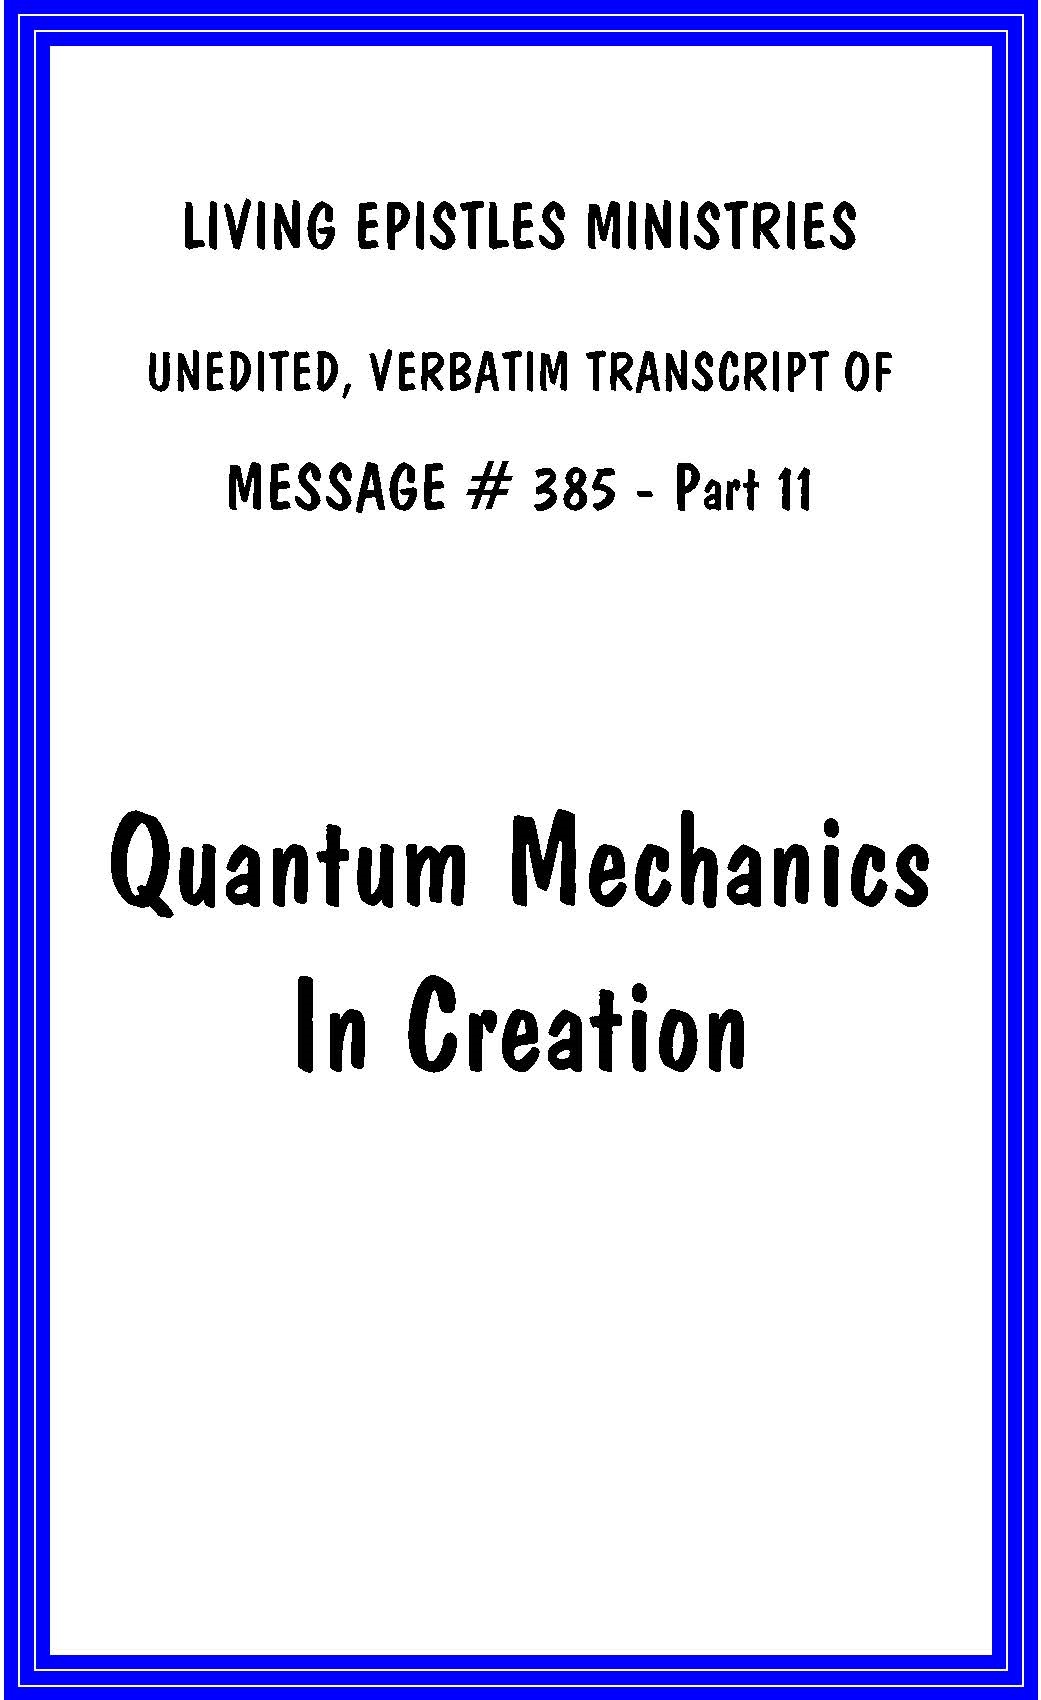 QuantumMechanicsInCreation.LEM.385.11.Cover.040616.72dpi